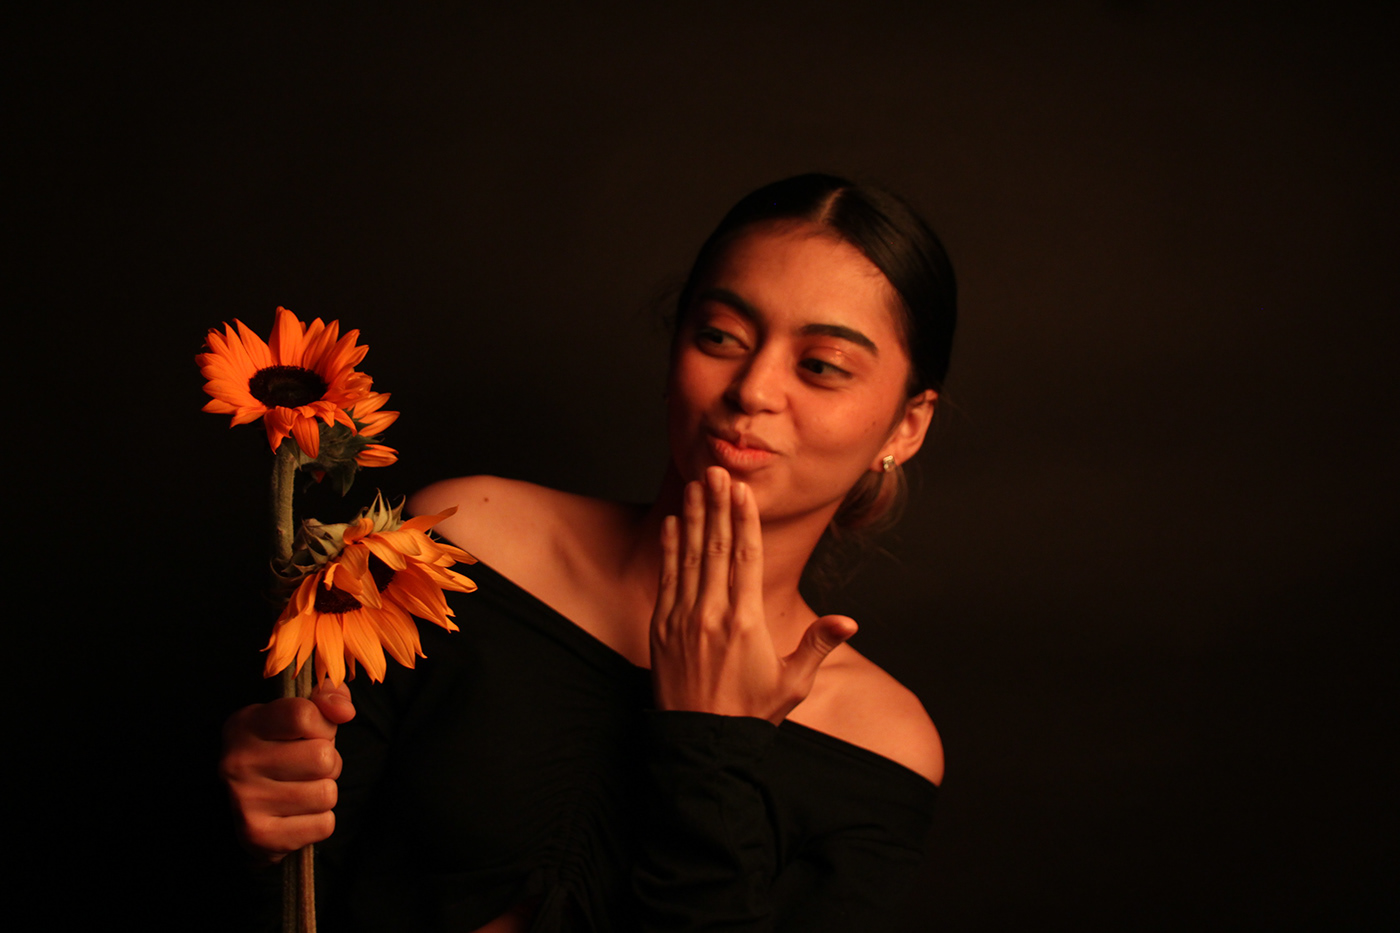 Fotografia Photography  portrait beauty woman sunflower girasol yellow vangoghinspired